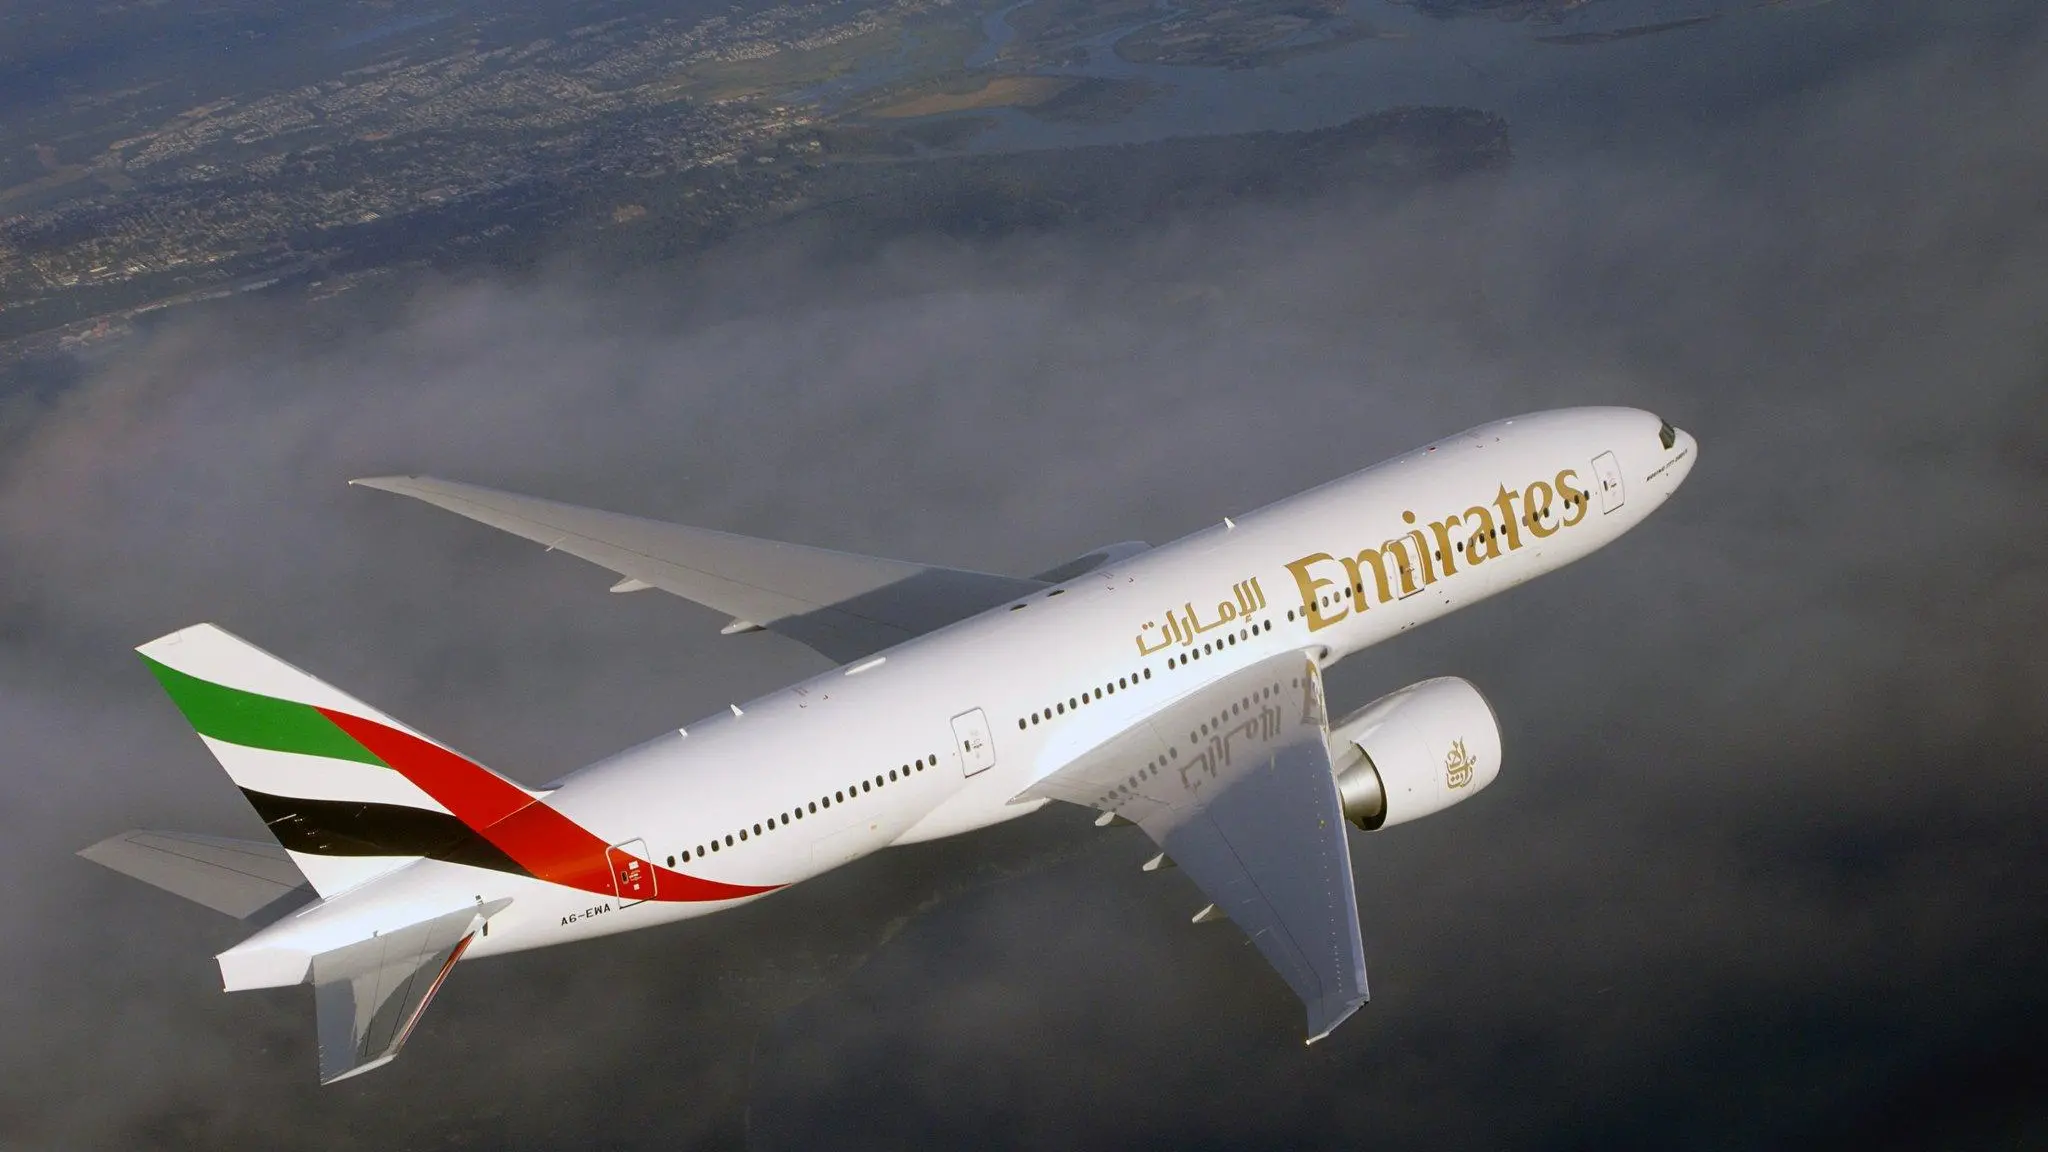 Dubai flights: Emirates issues alert as peak travel begins in 2 days